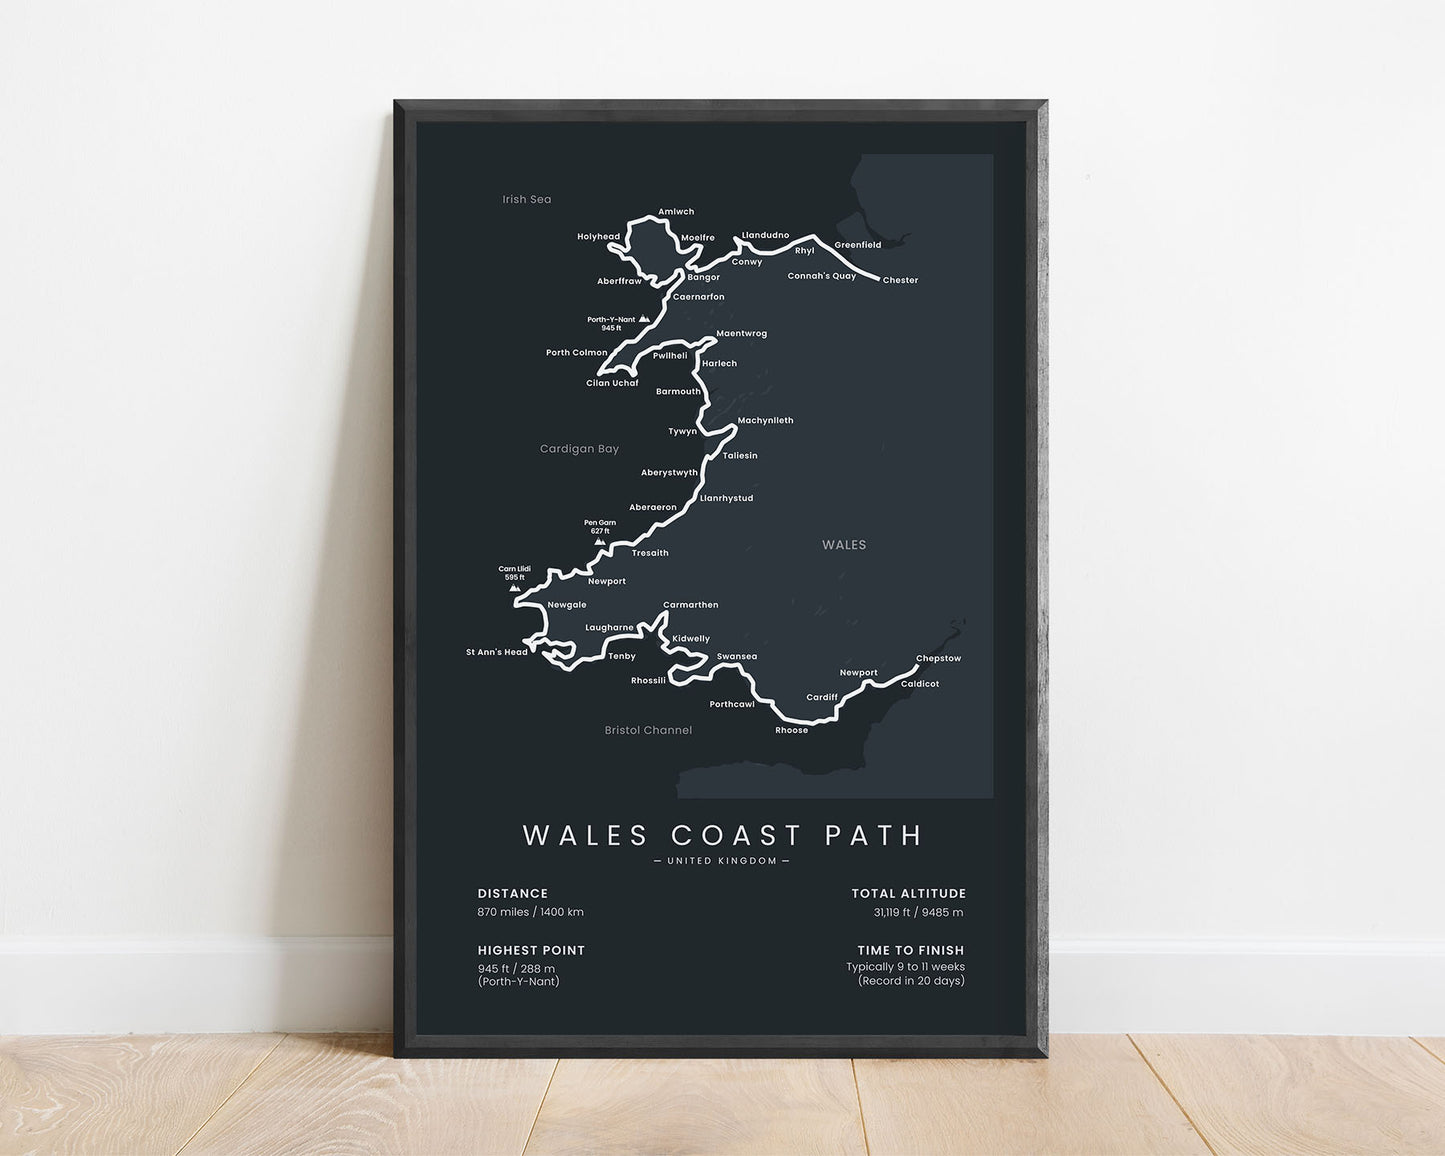 Wales Coast Path (Pembrokeshire Coast Path) thru hike print with black background